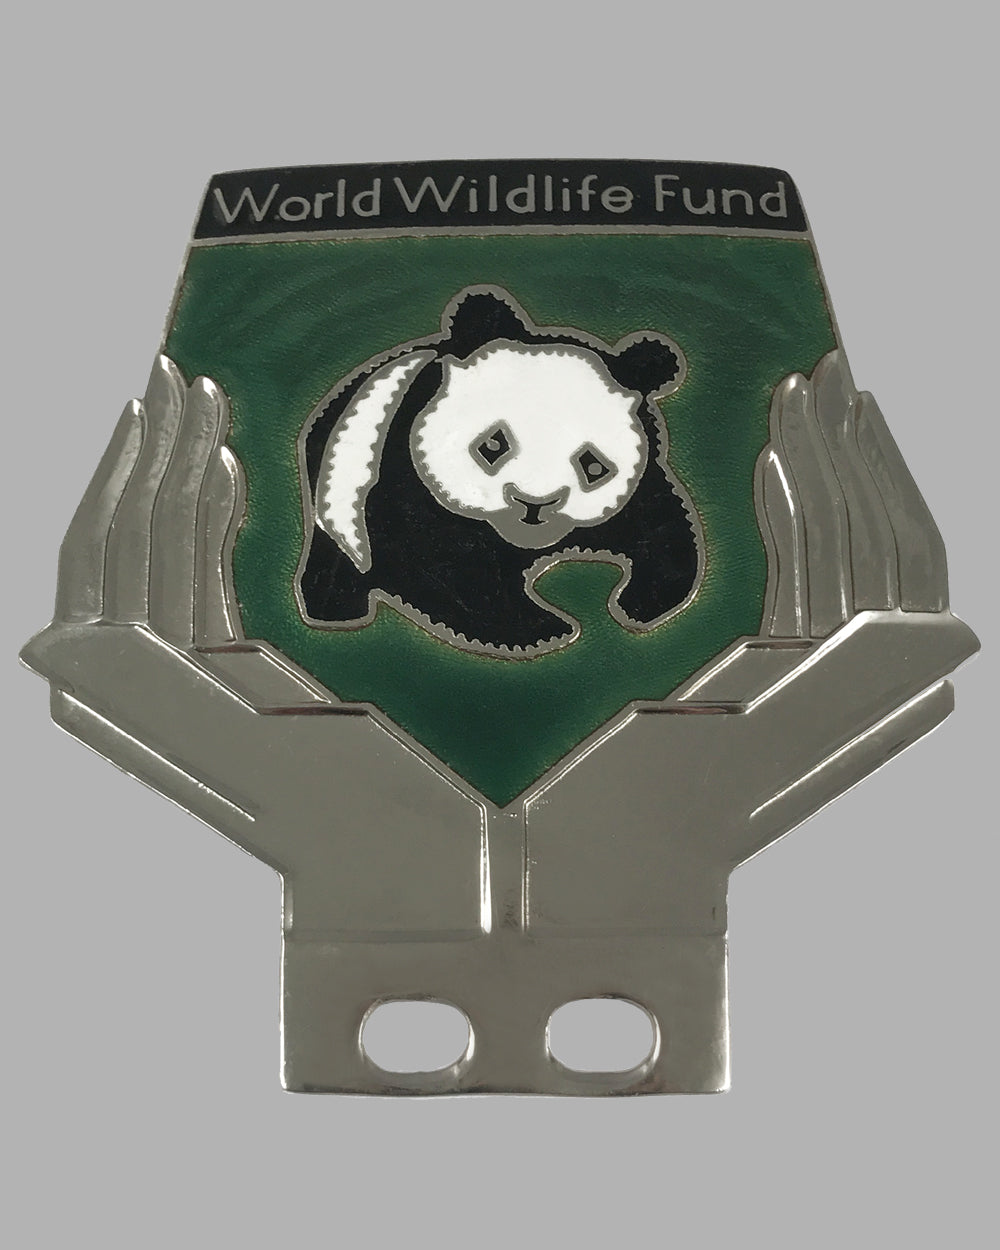 World Wildlife Fund bumper or license plate badge